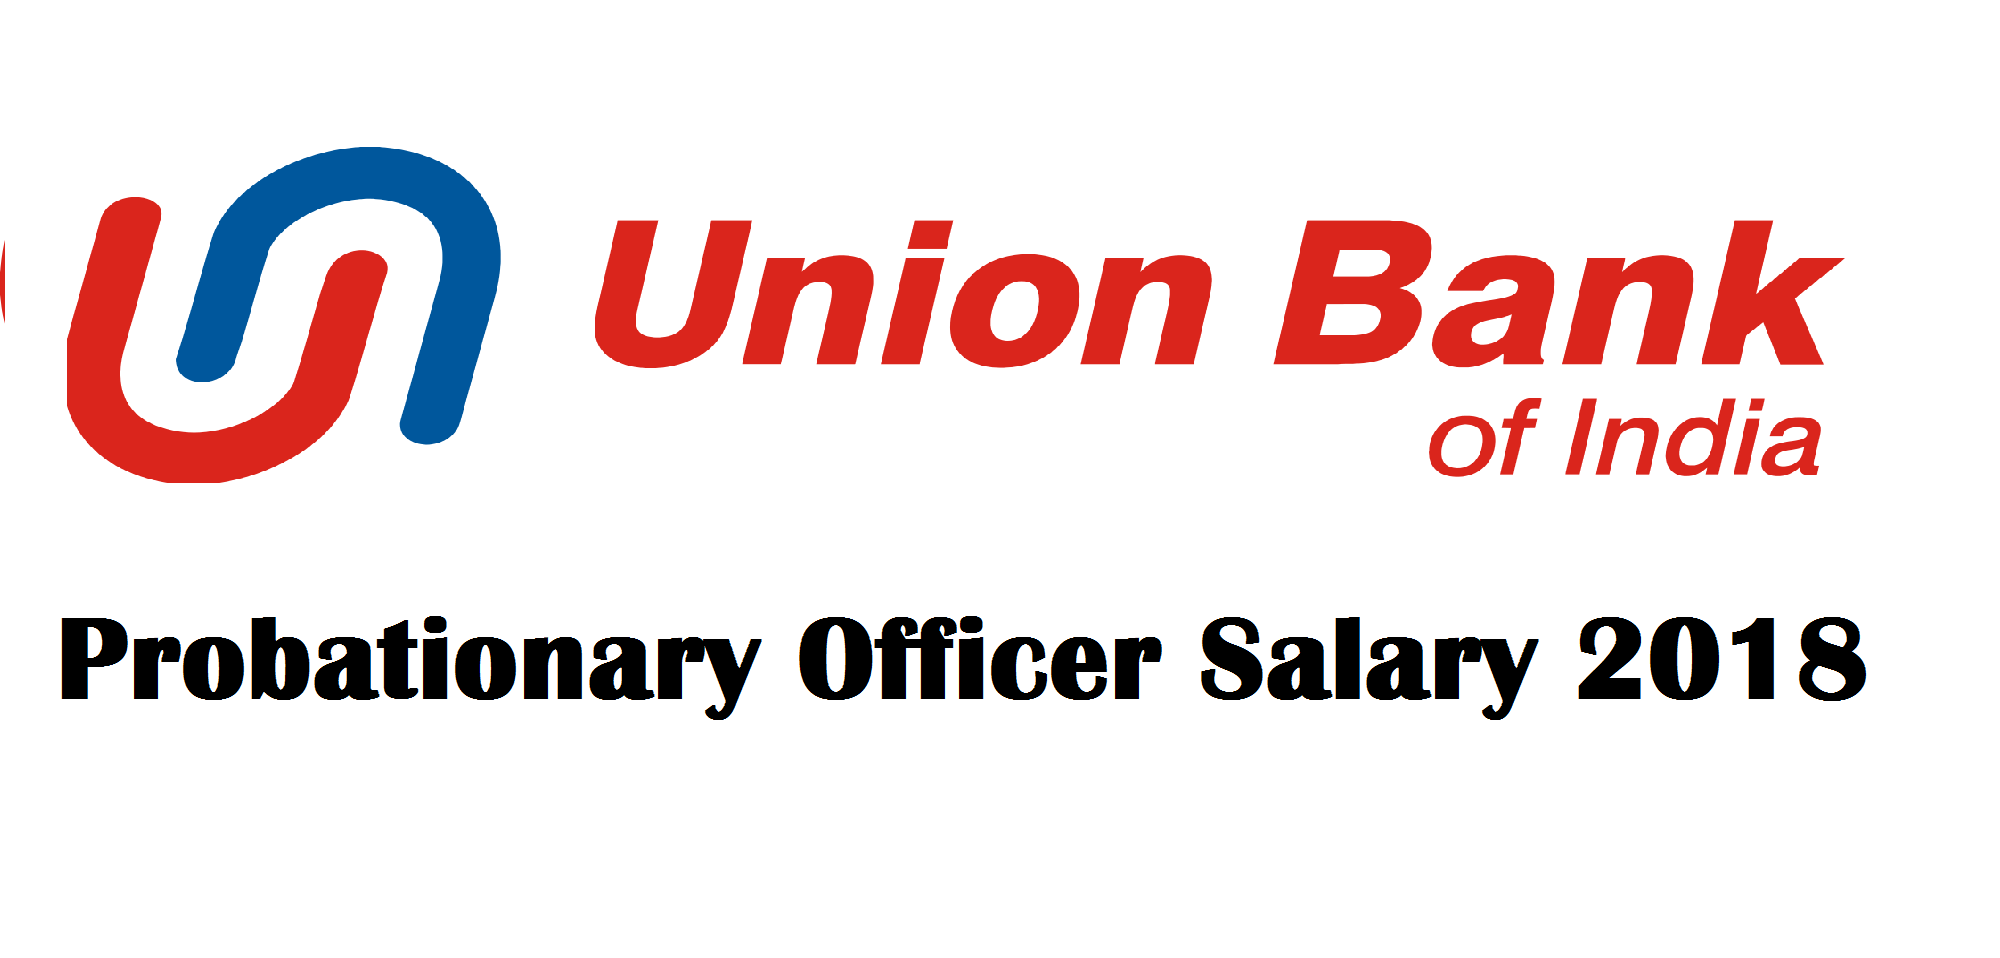 Union Bank of India PO Salary